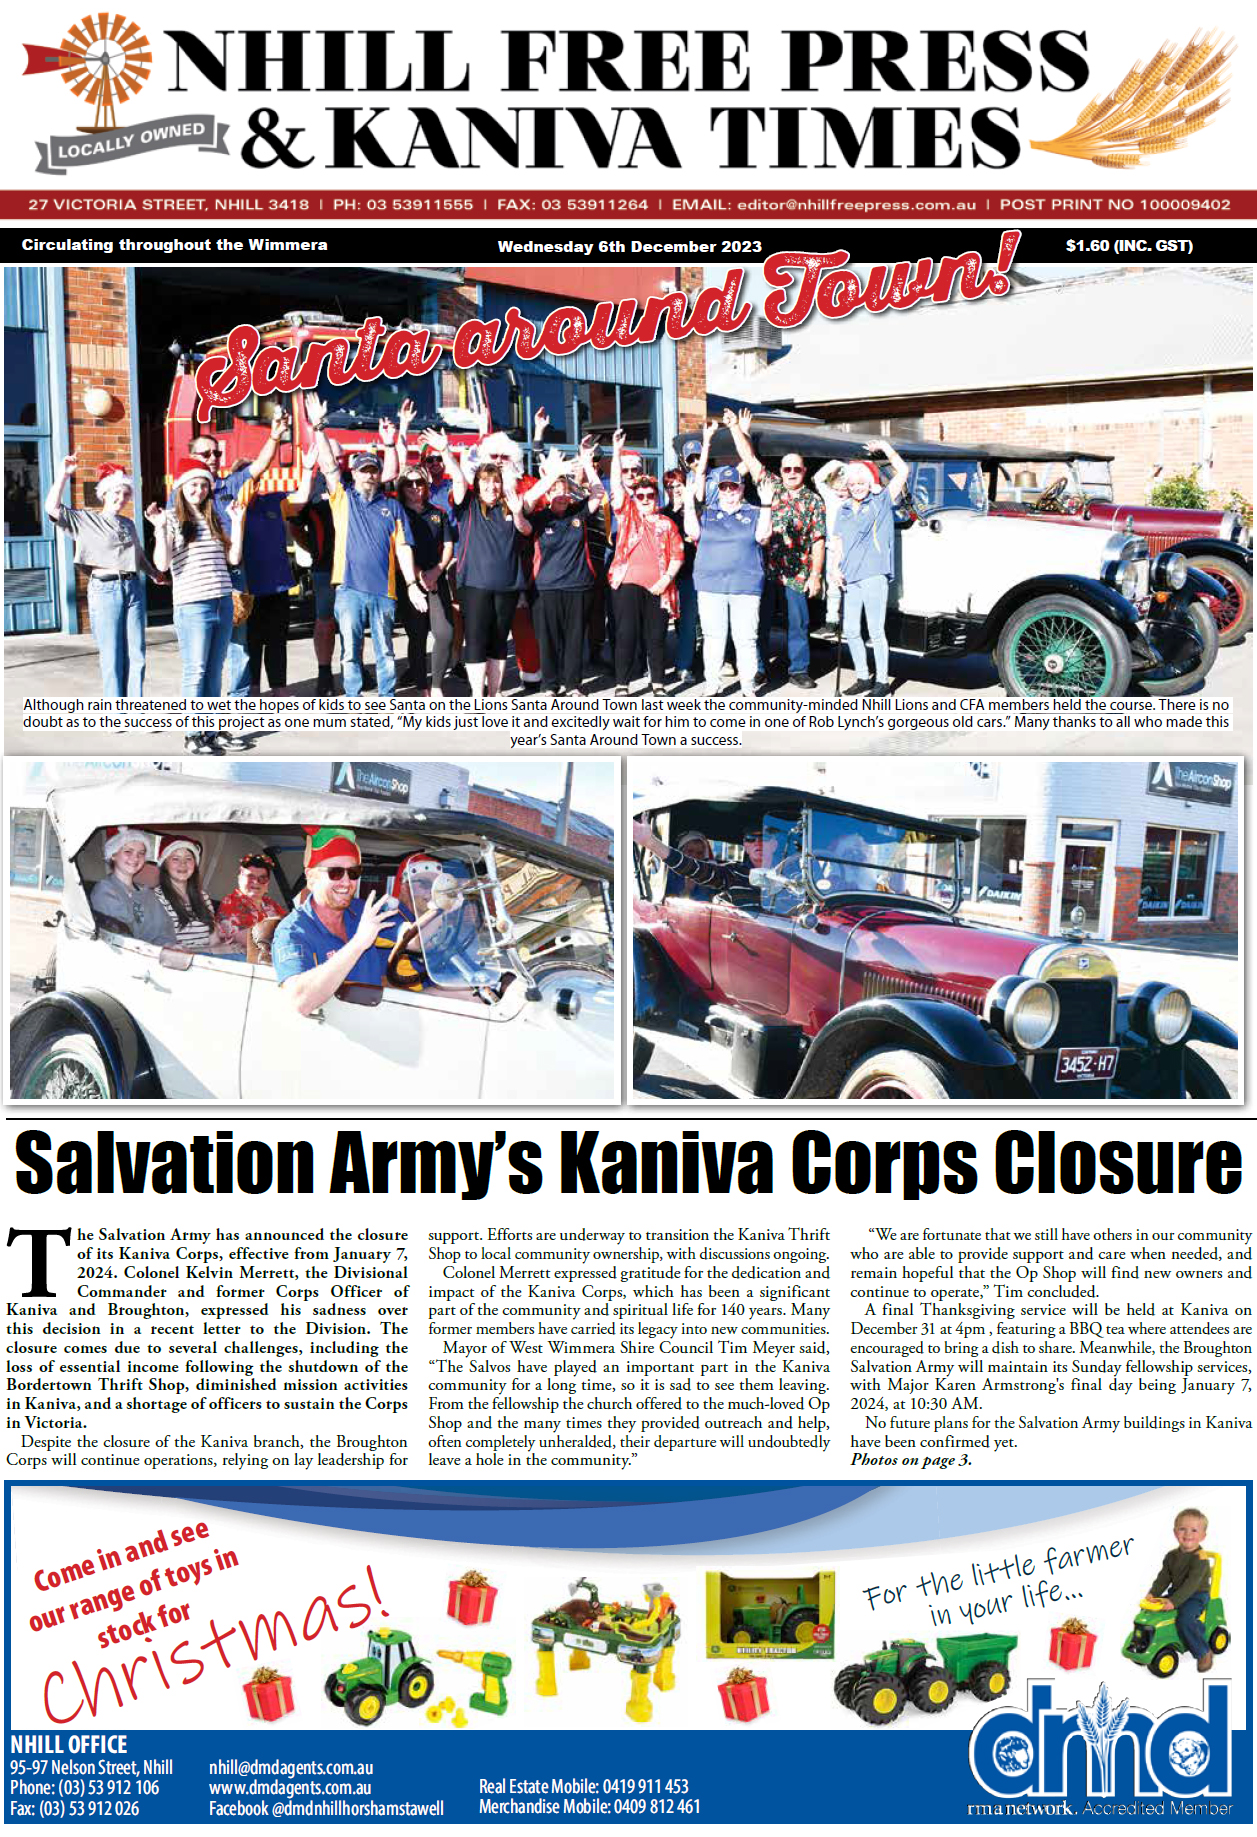 Nhill Free Press & Kaniva Times 6 December 2023